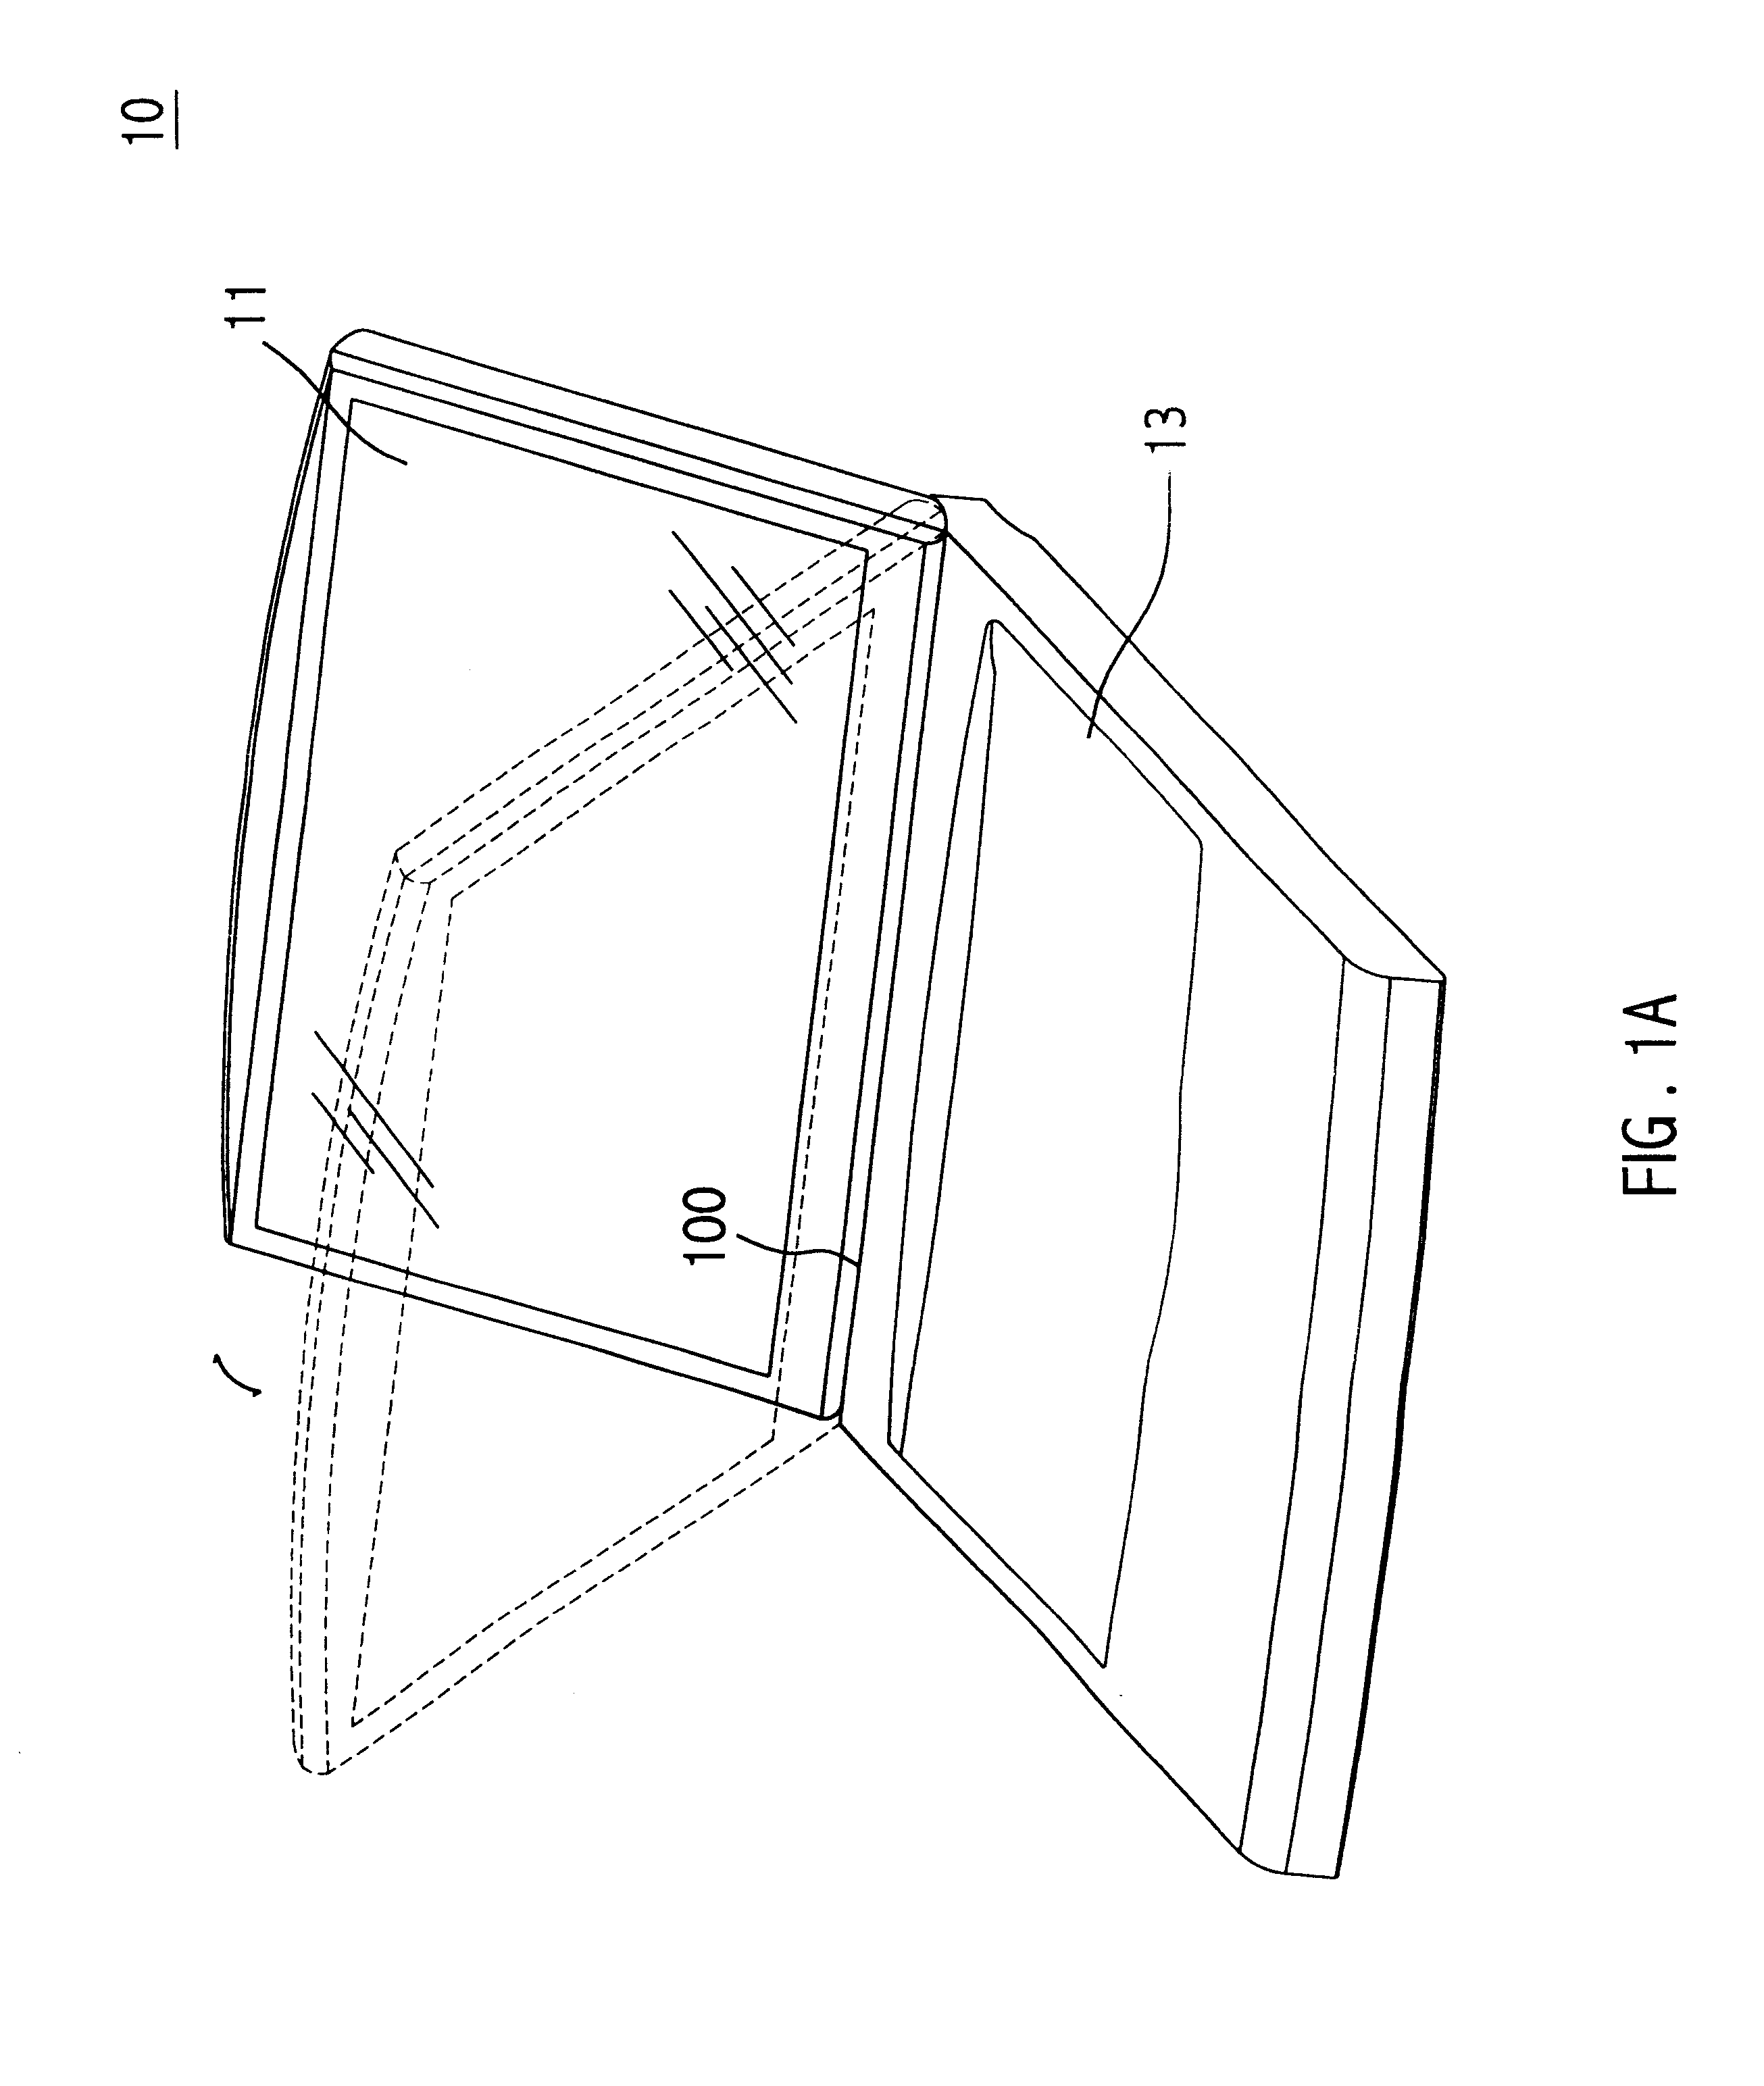 Flat panel display apparatus and tilt/swivel mechanism therein